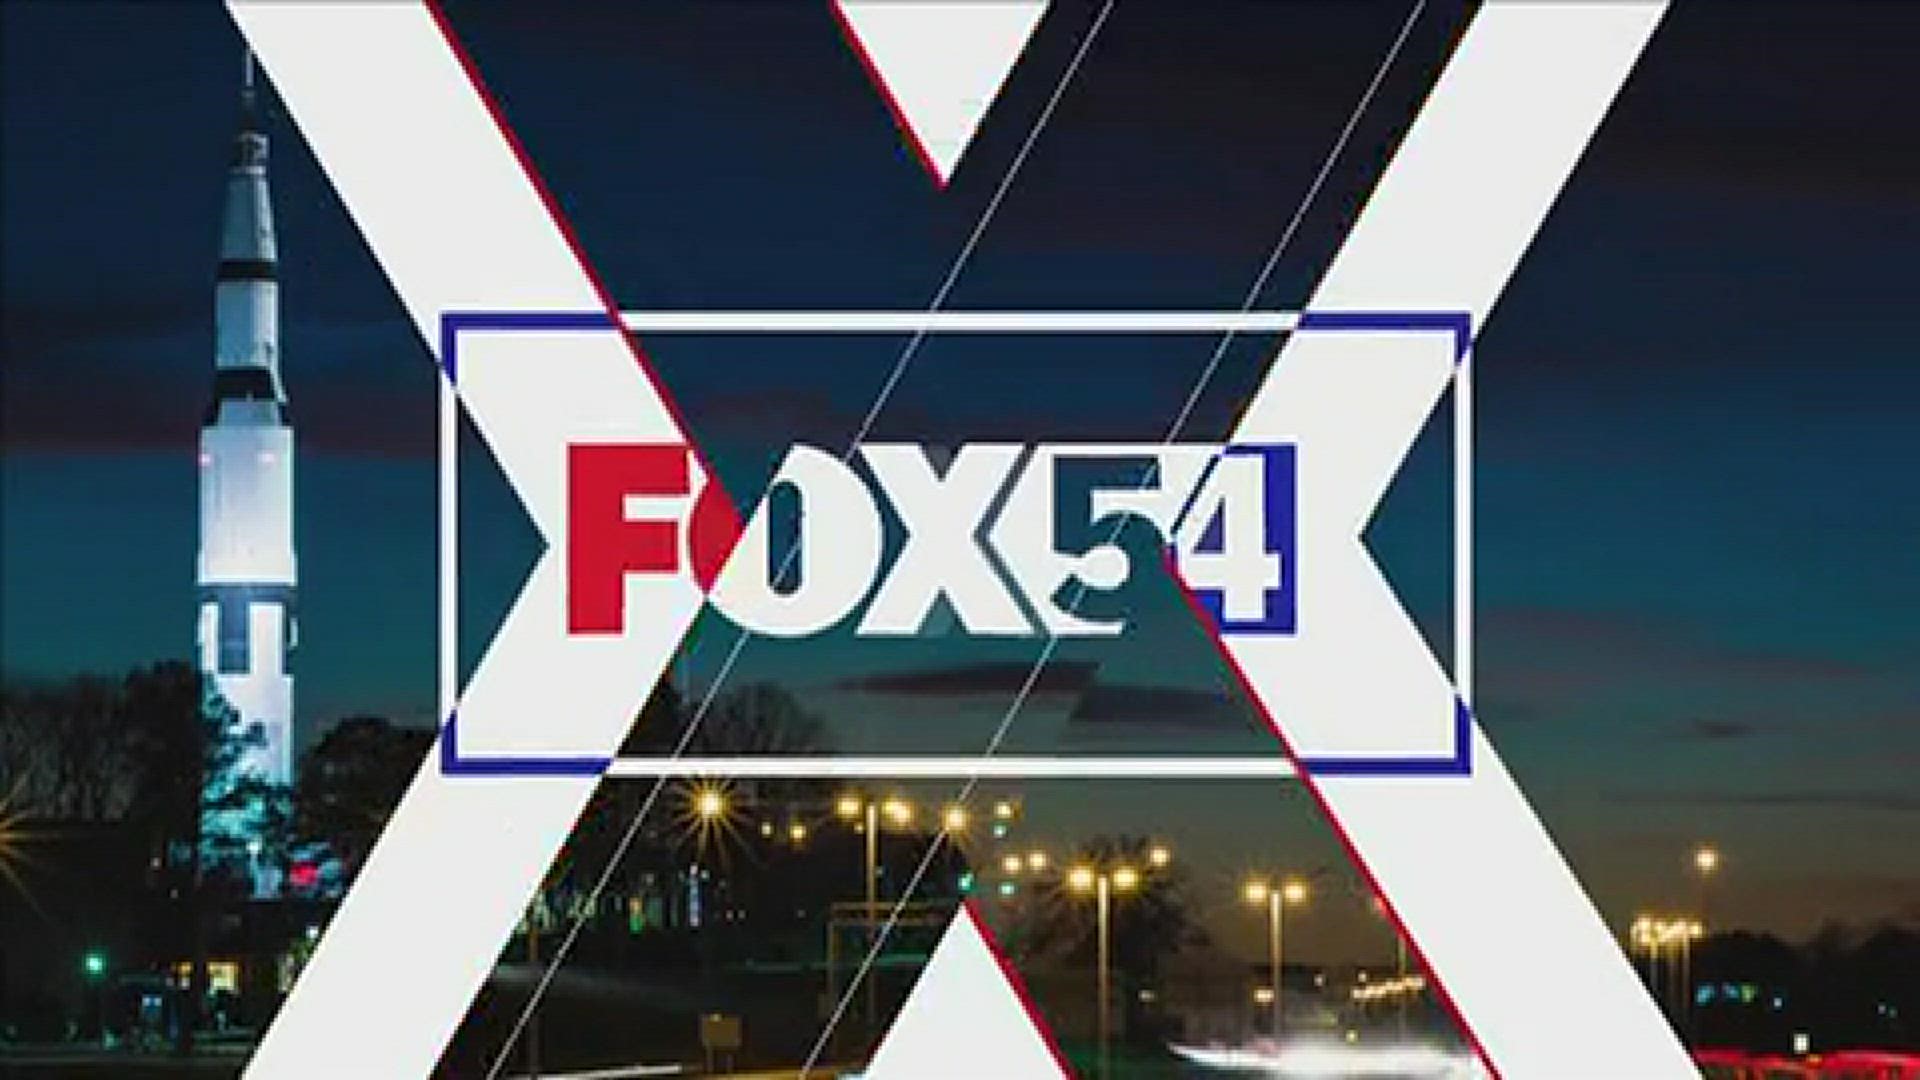 WATCH: FOX54 News at 9:00